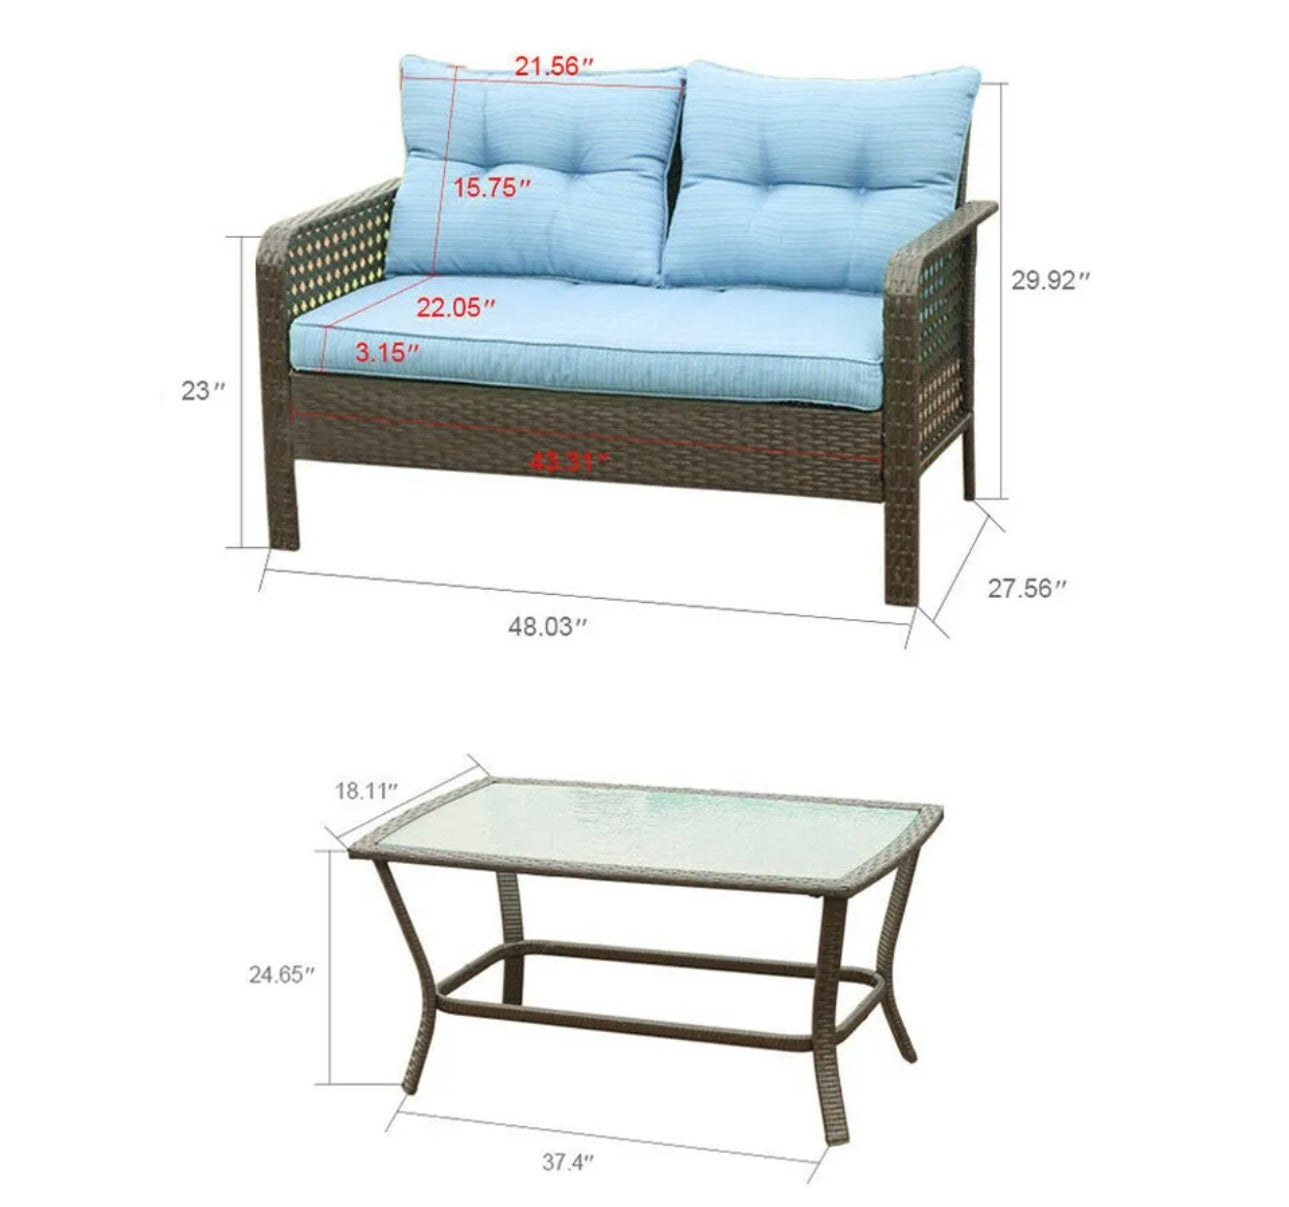 2 Pcs Outdoor Patio Sofa Furniture Set Rattan Wicker Padded Cushion Home Garden